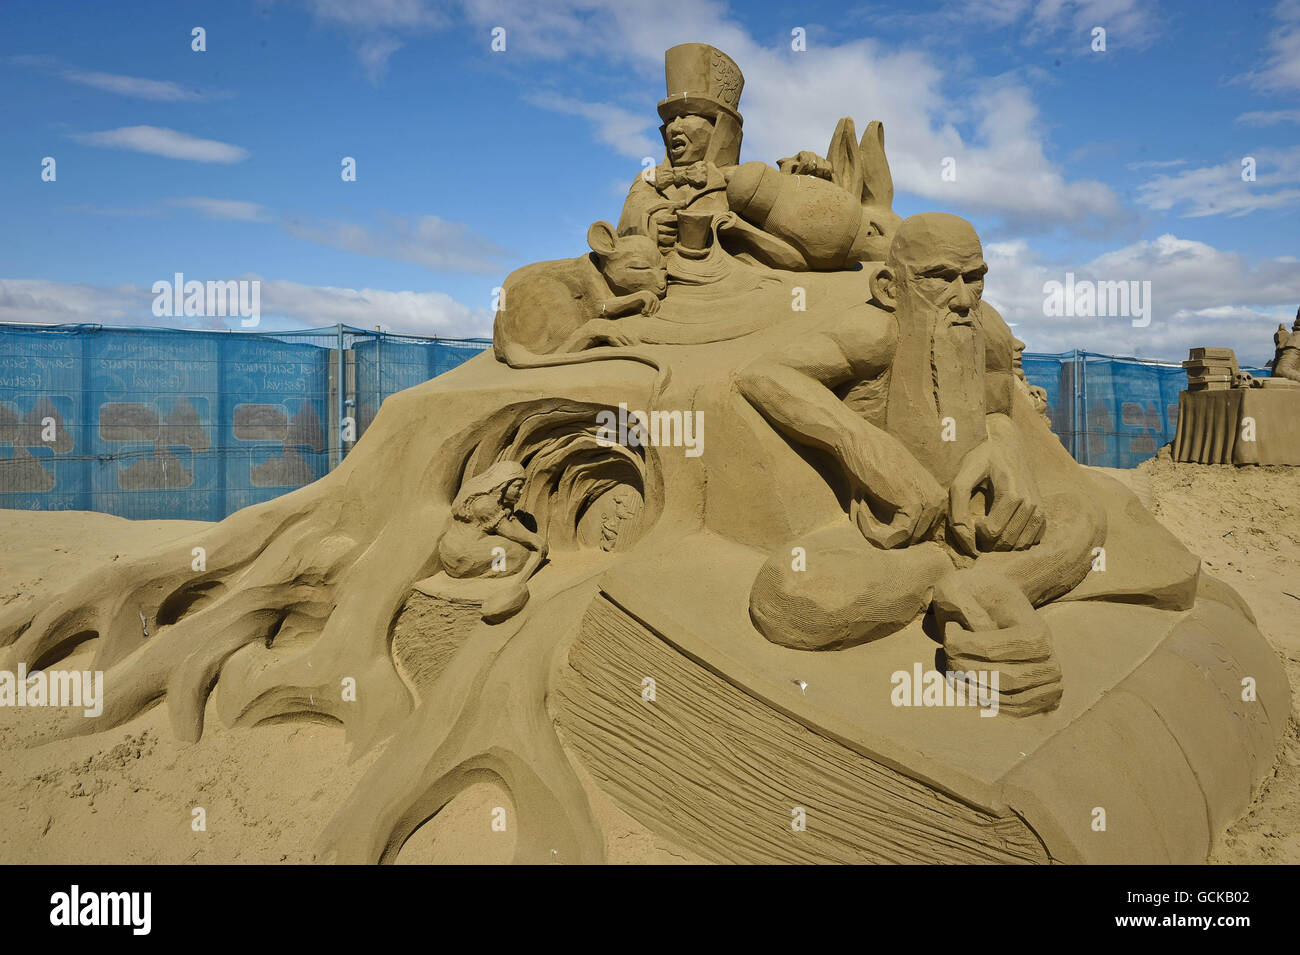 A sculpture of Alice in Wonderland in the Weston-super-Mare Sand ...